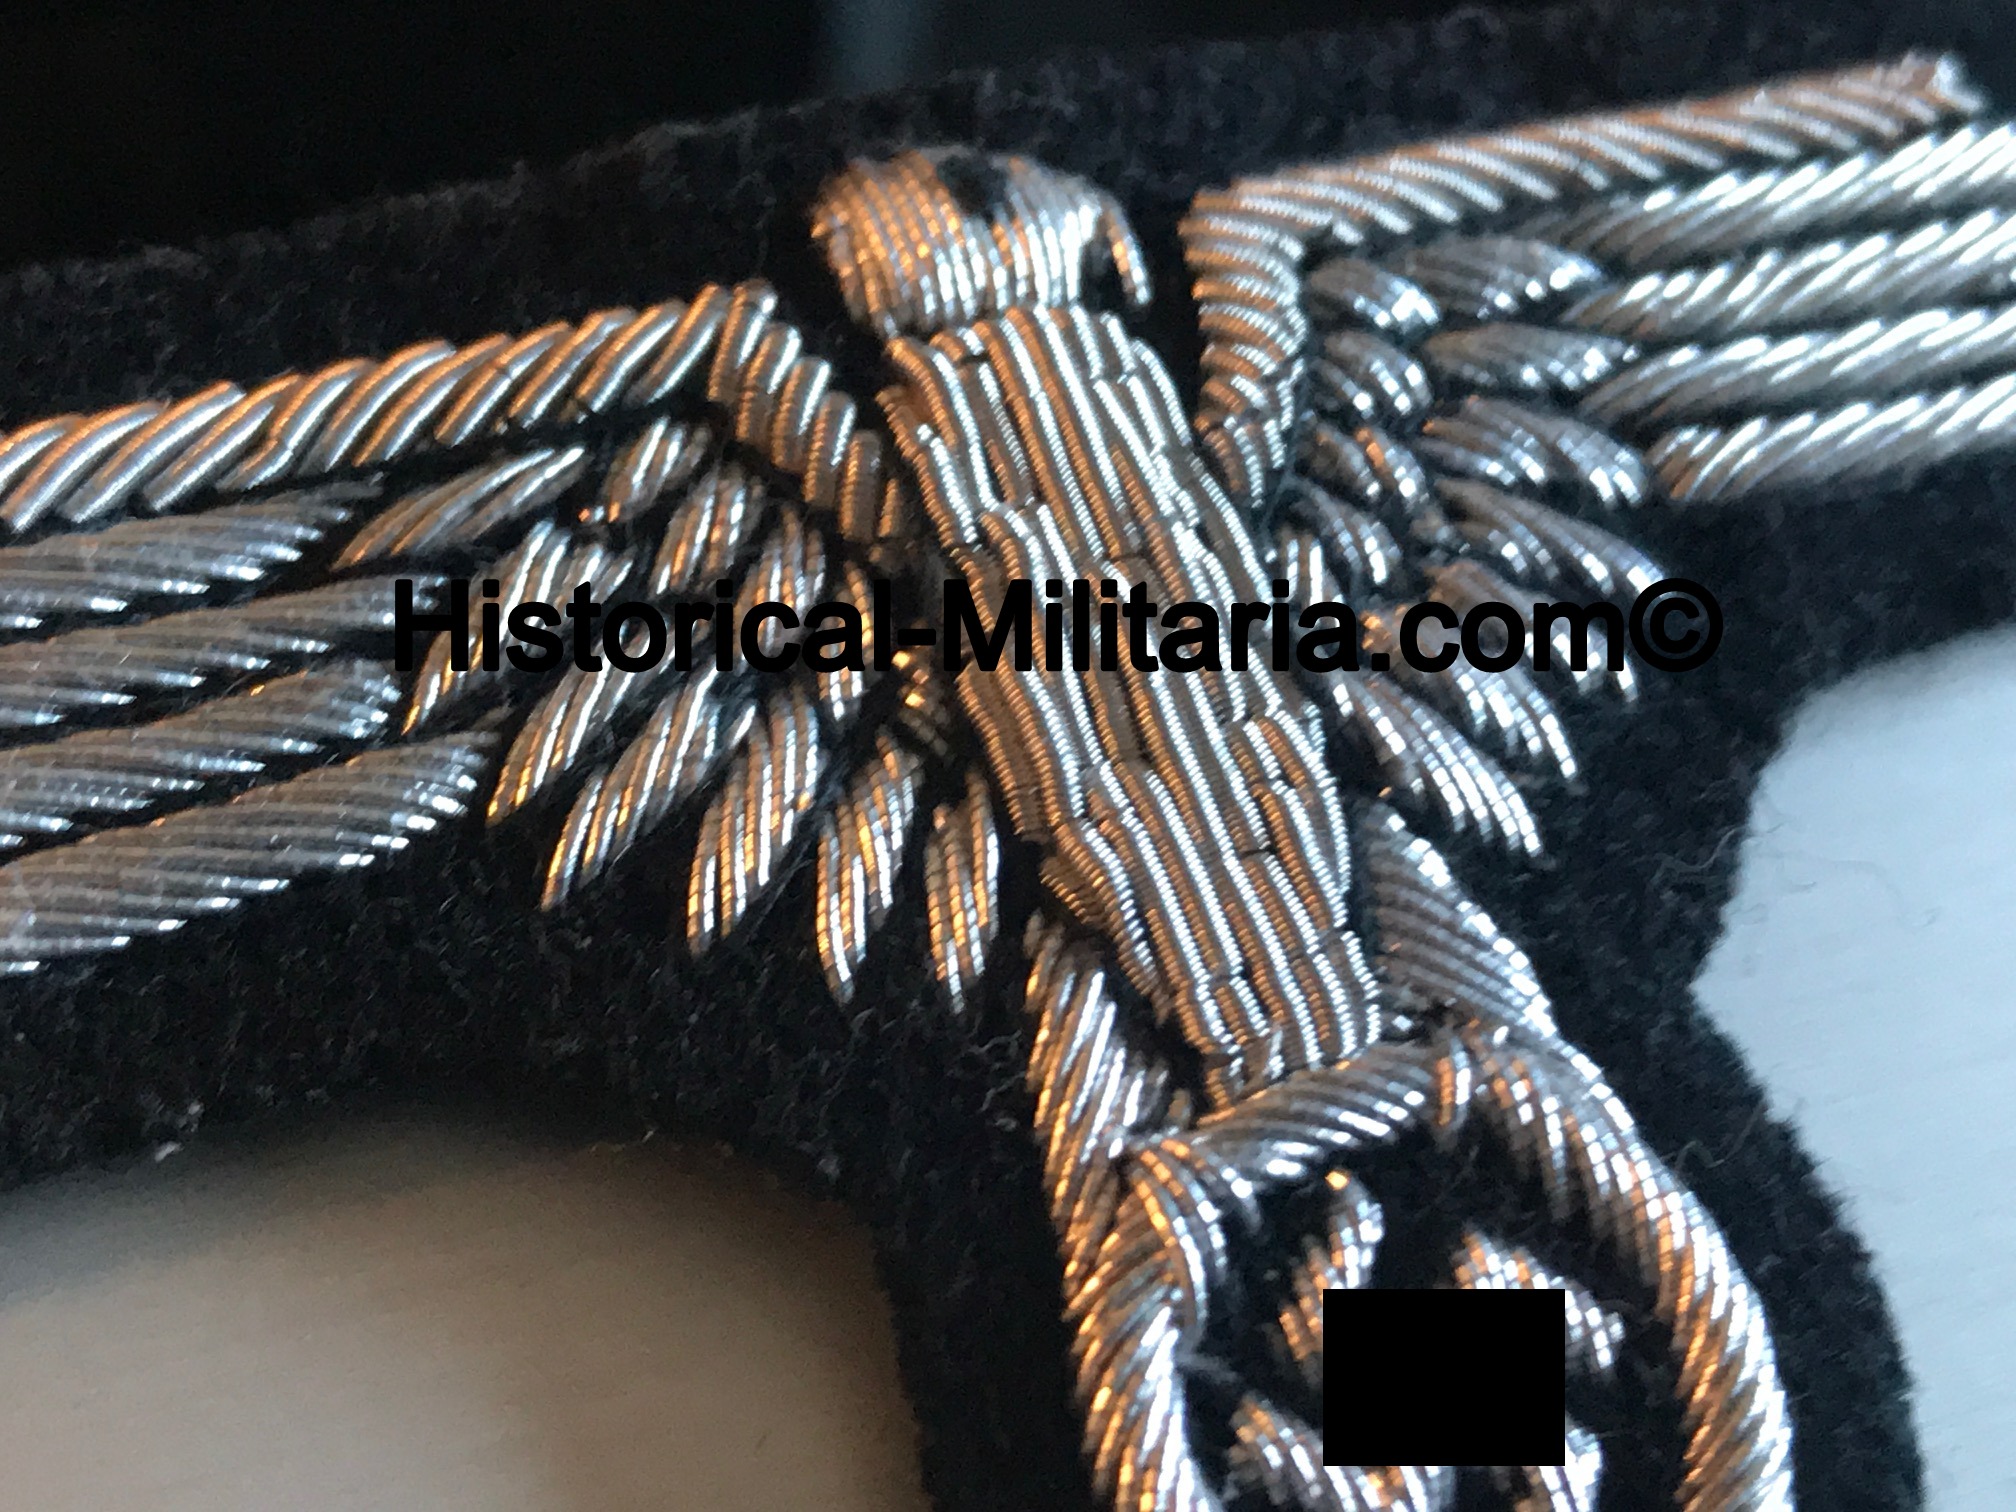 Waffen-SS Officer sleeve eagle no shiny highlights - Offiziersadler Ärmeladler Elite Waffen-SS - Aquila da braccio Ufficiale delle Waffen-SS